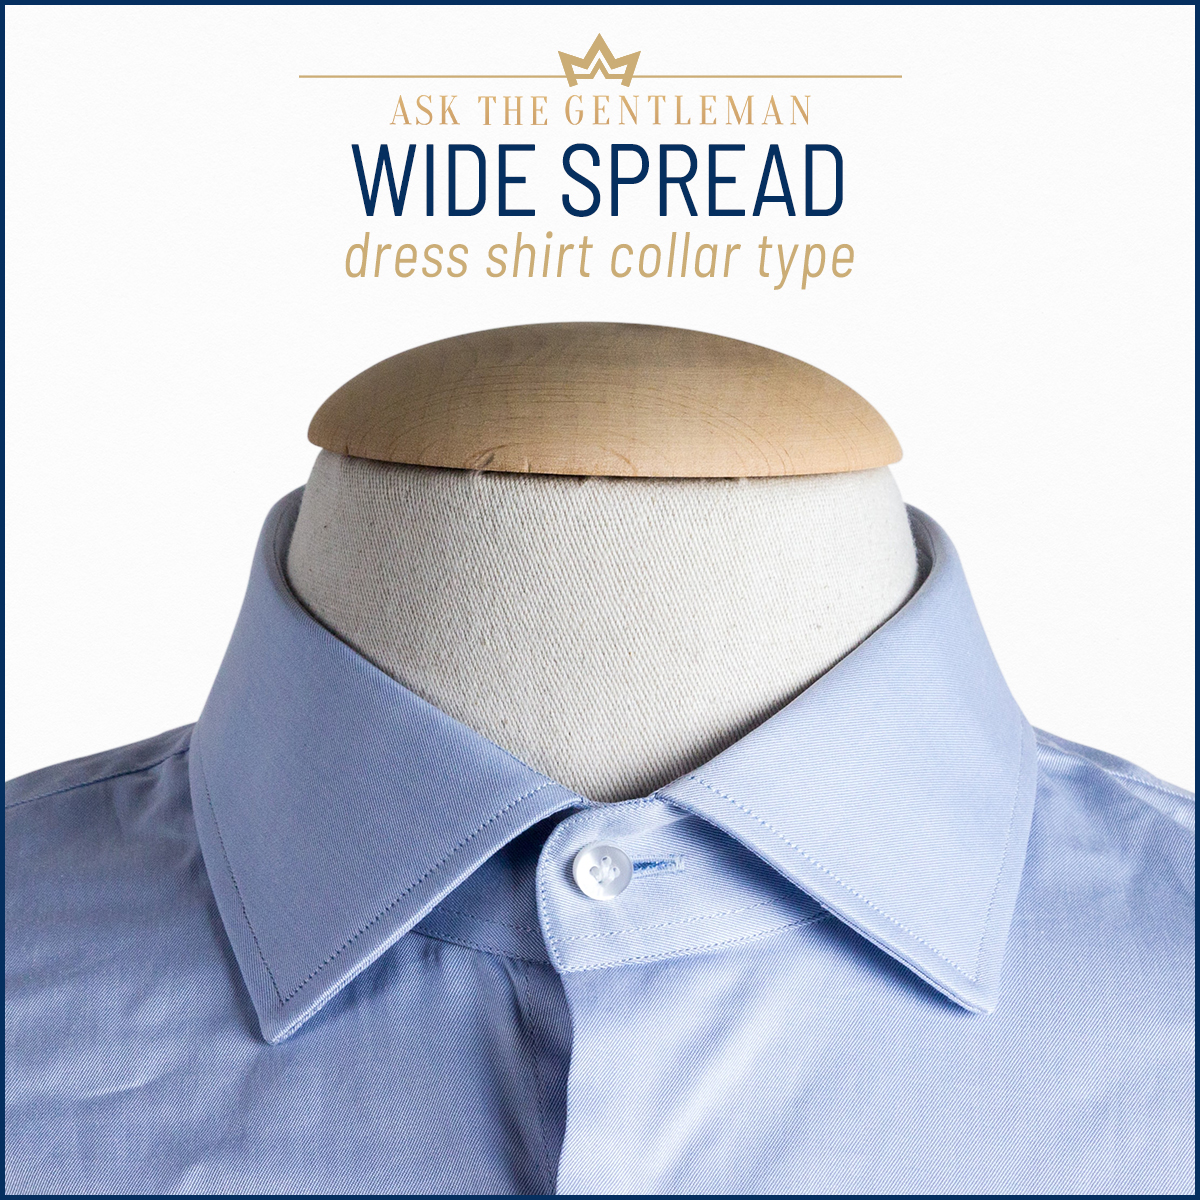 Wide-spread dress shirt collar type